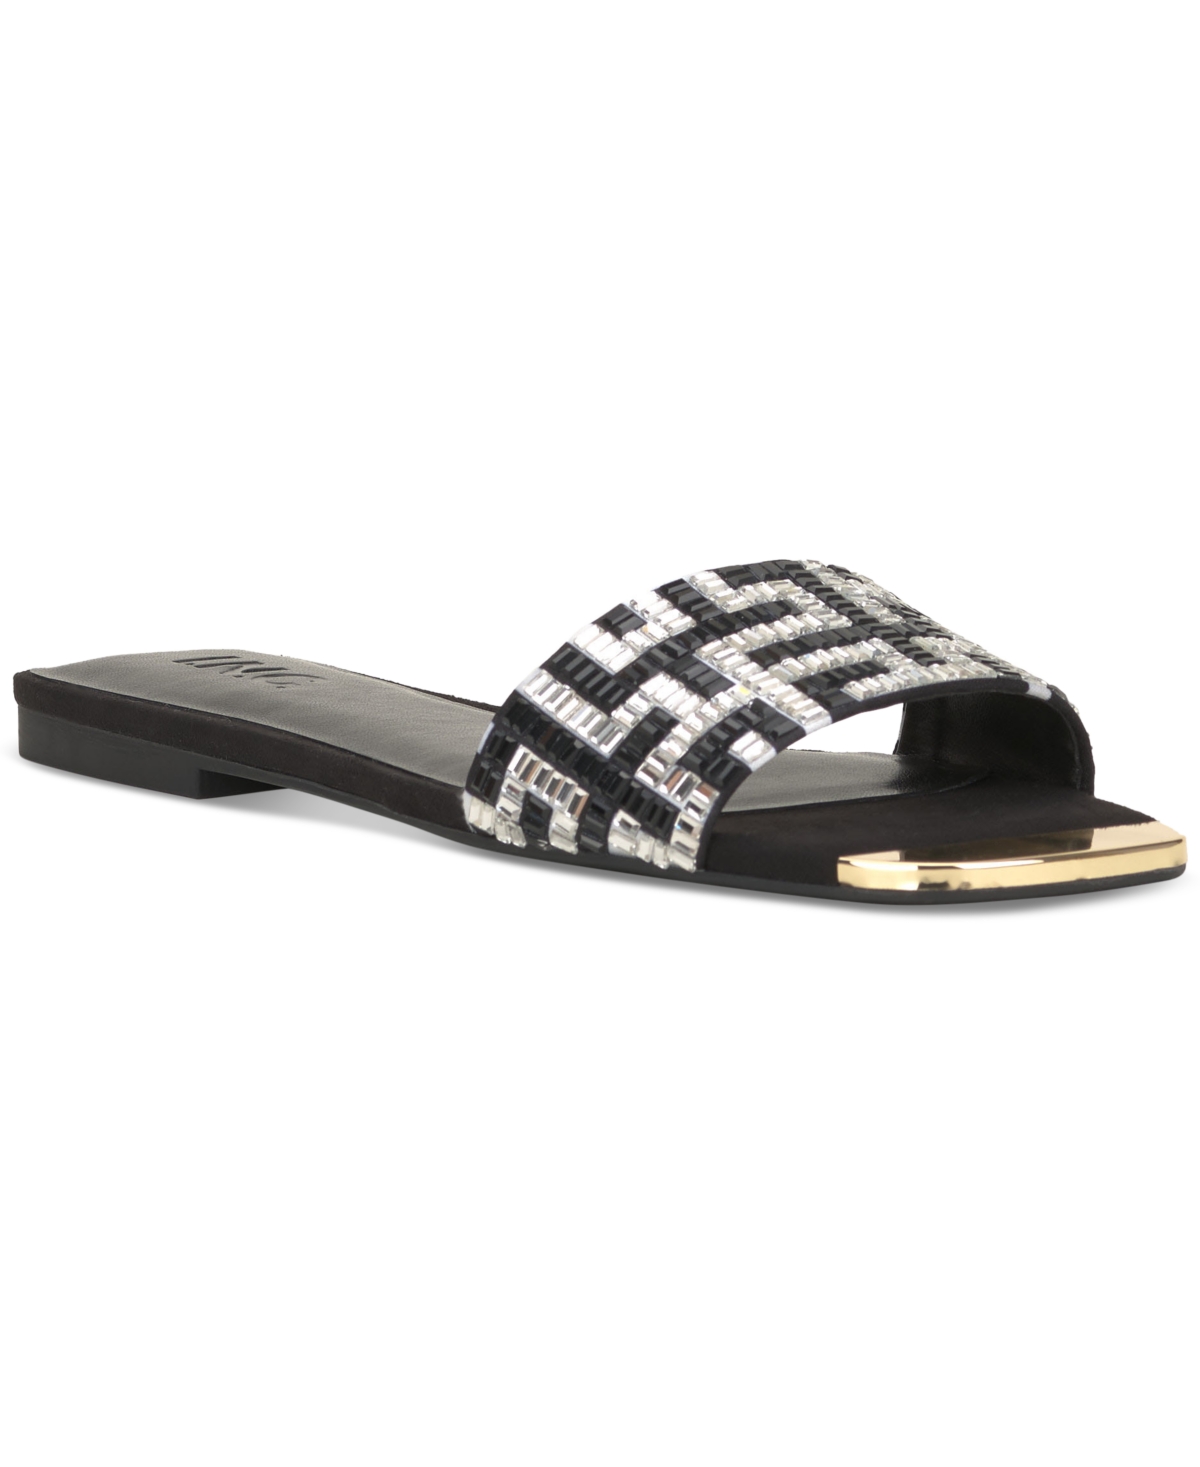 Women's Pabla Slip-On Flat Sandals, Created for Macy's - Maze